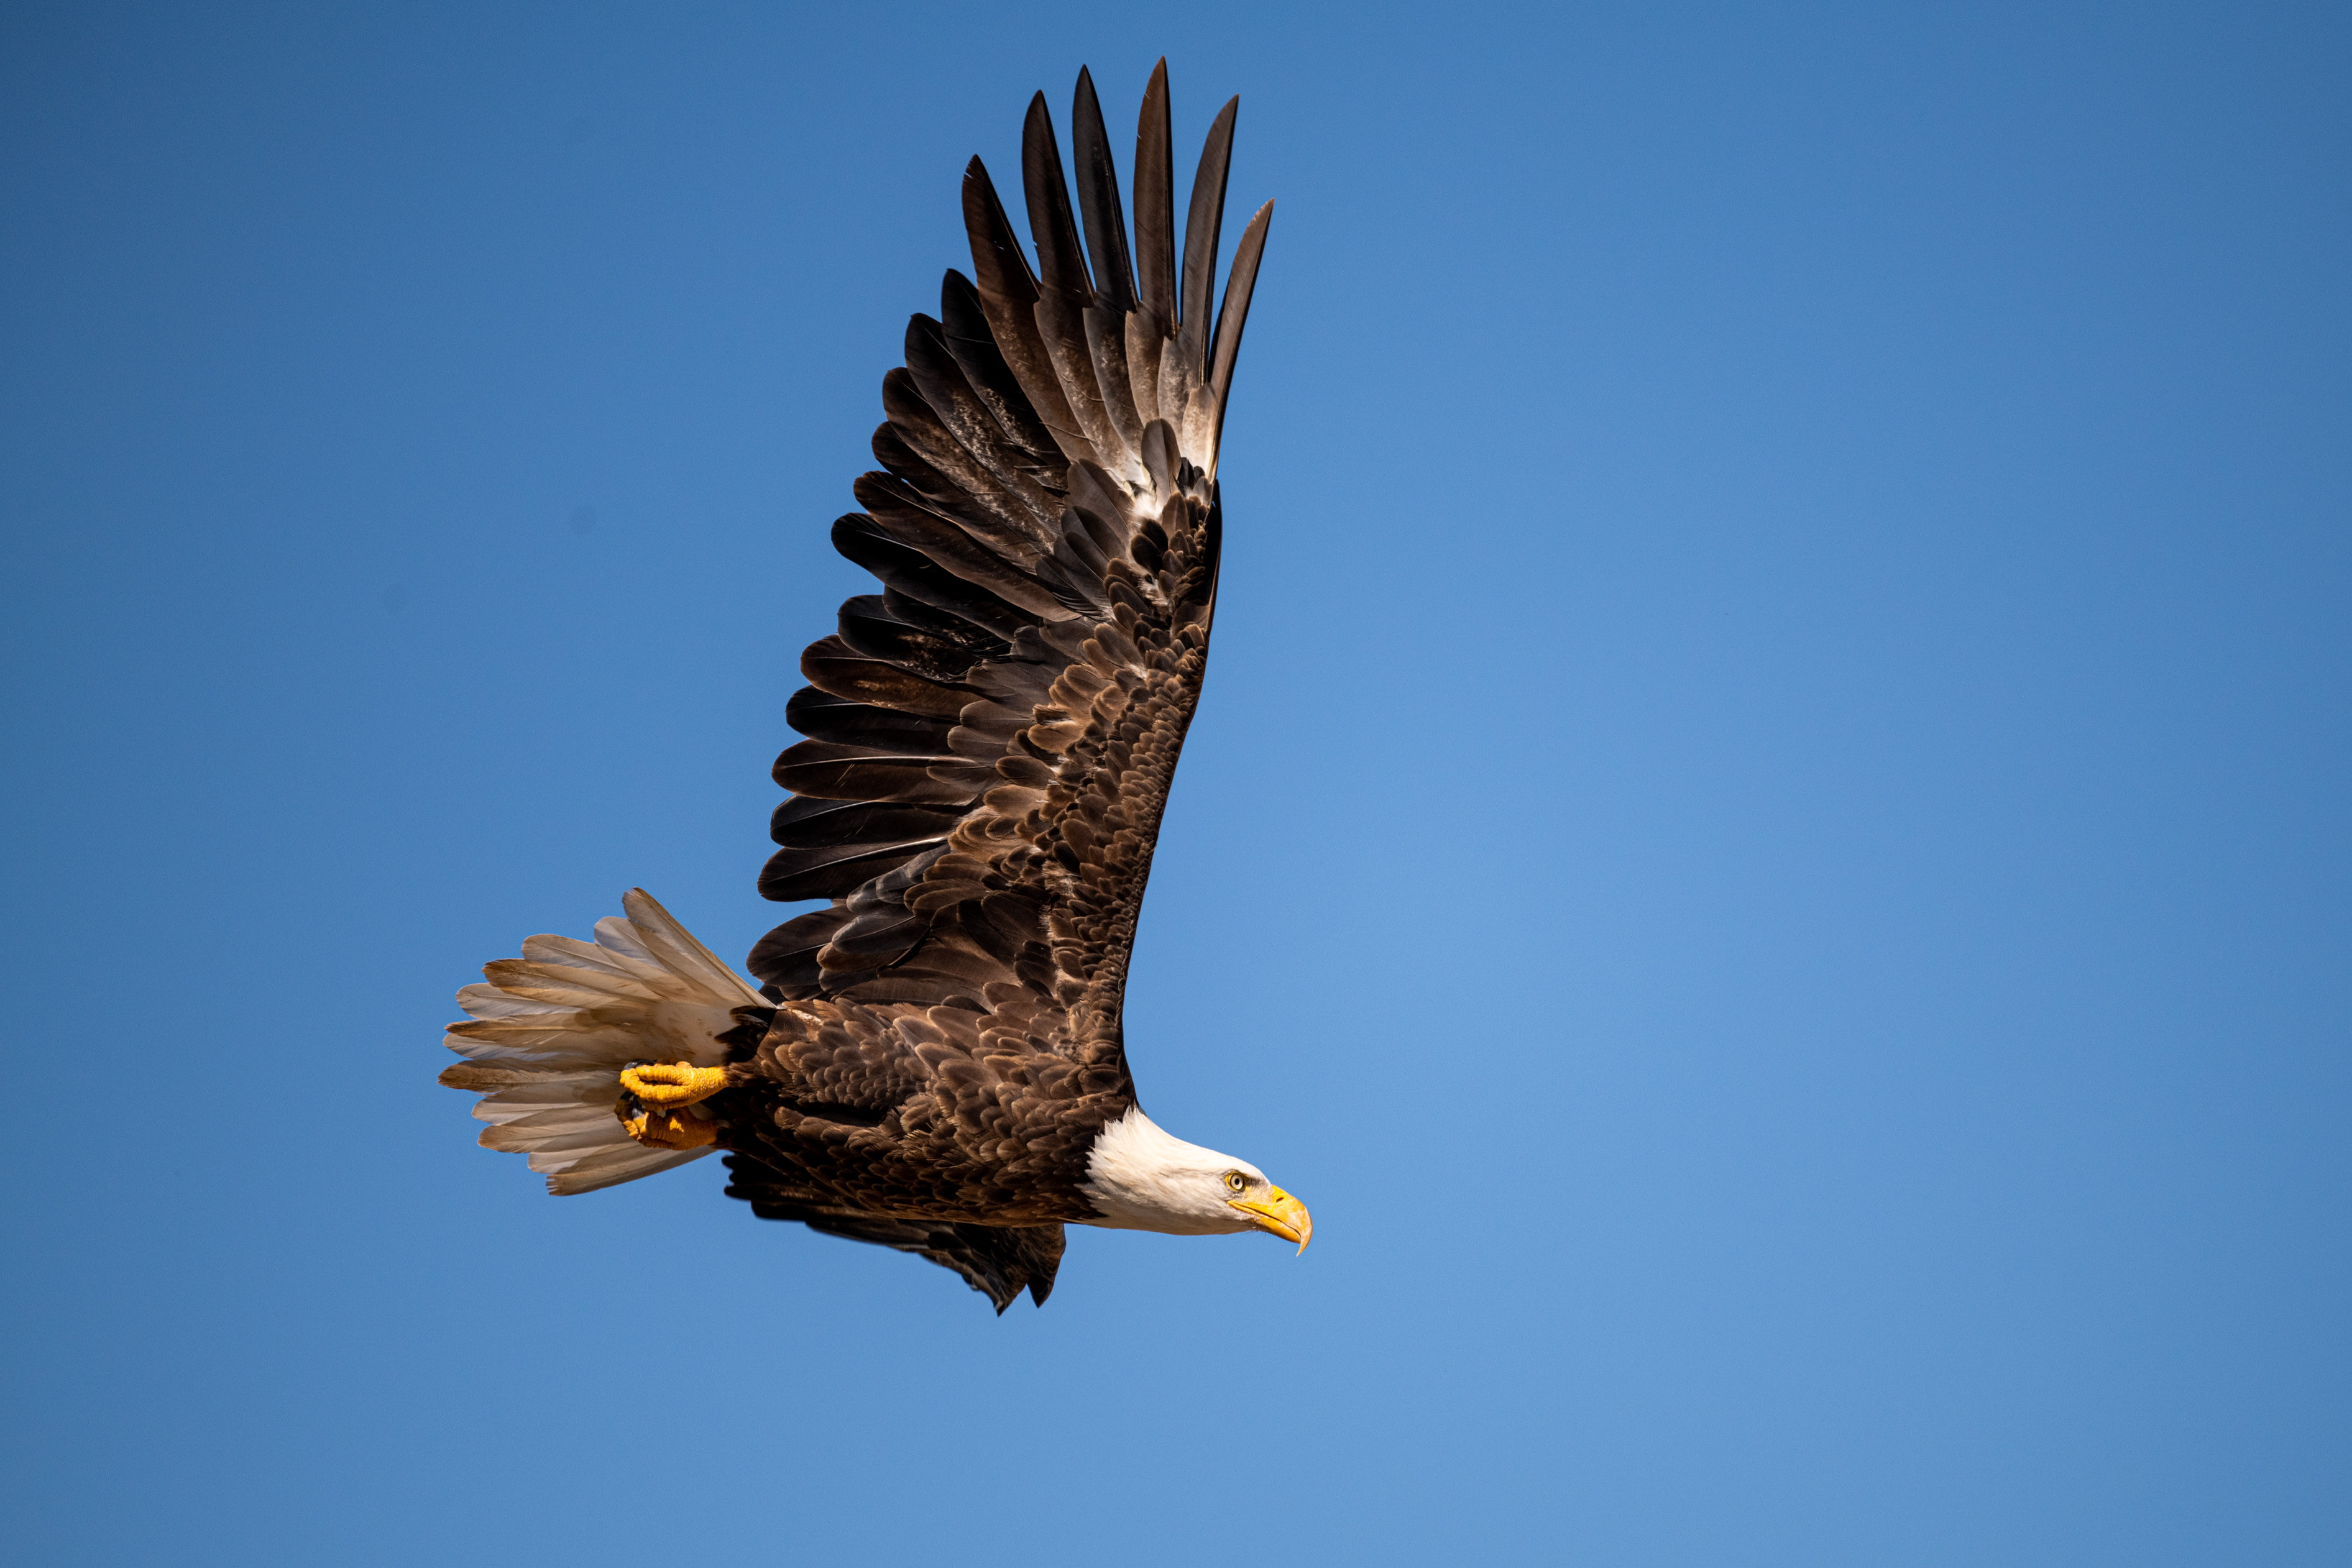 Photo by Douglas Coxon   |  A Bald Eagle demonstrating its wonderful plumage